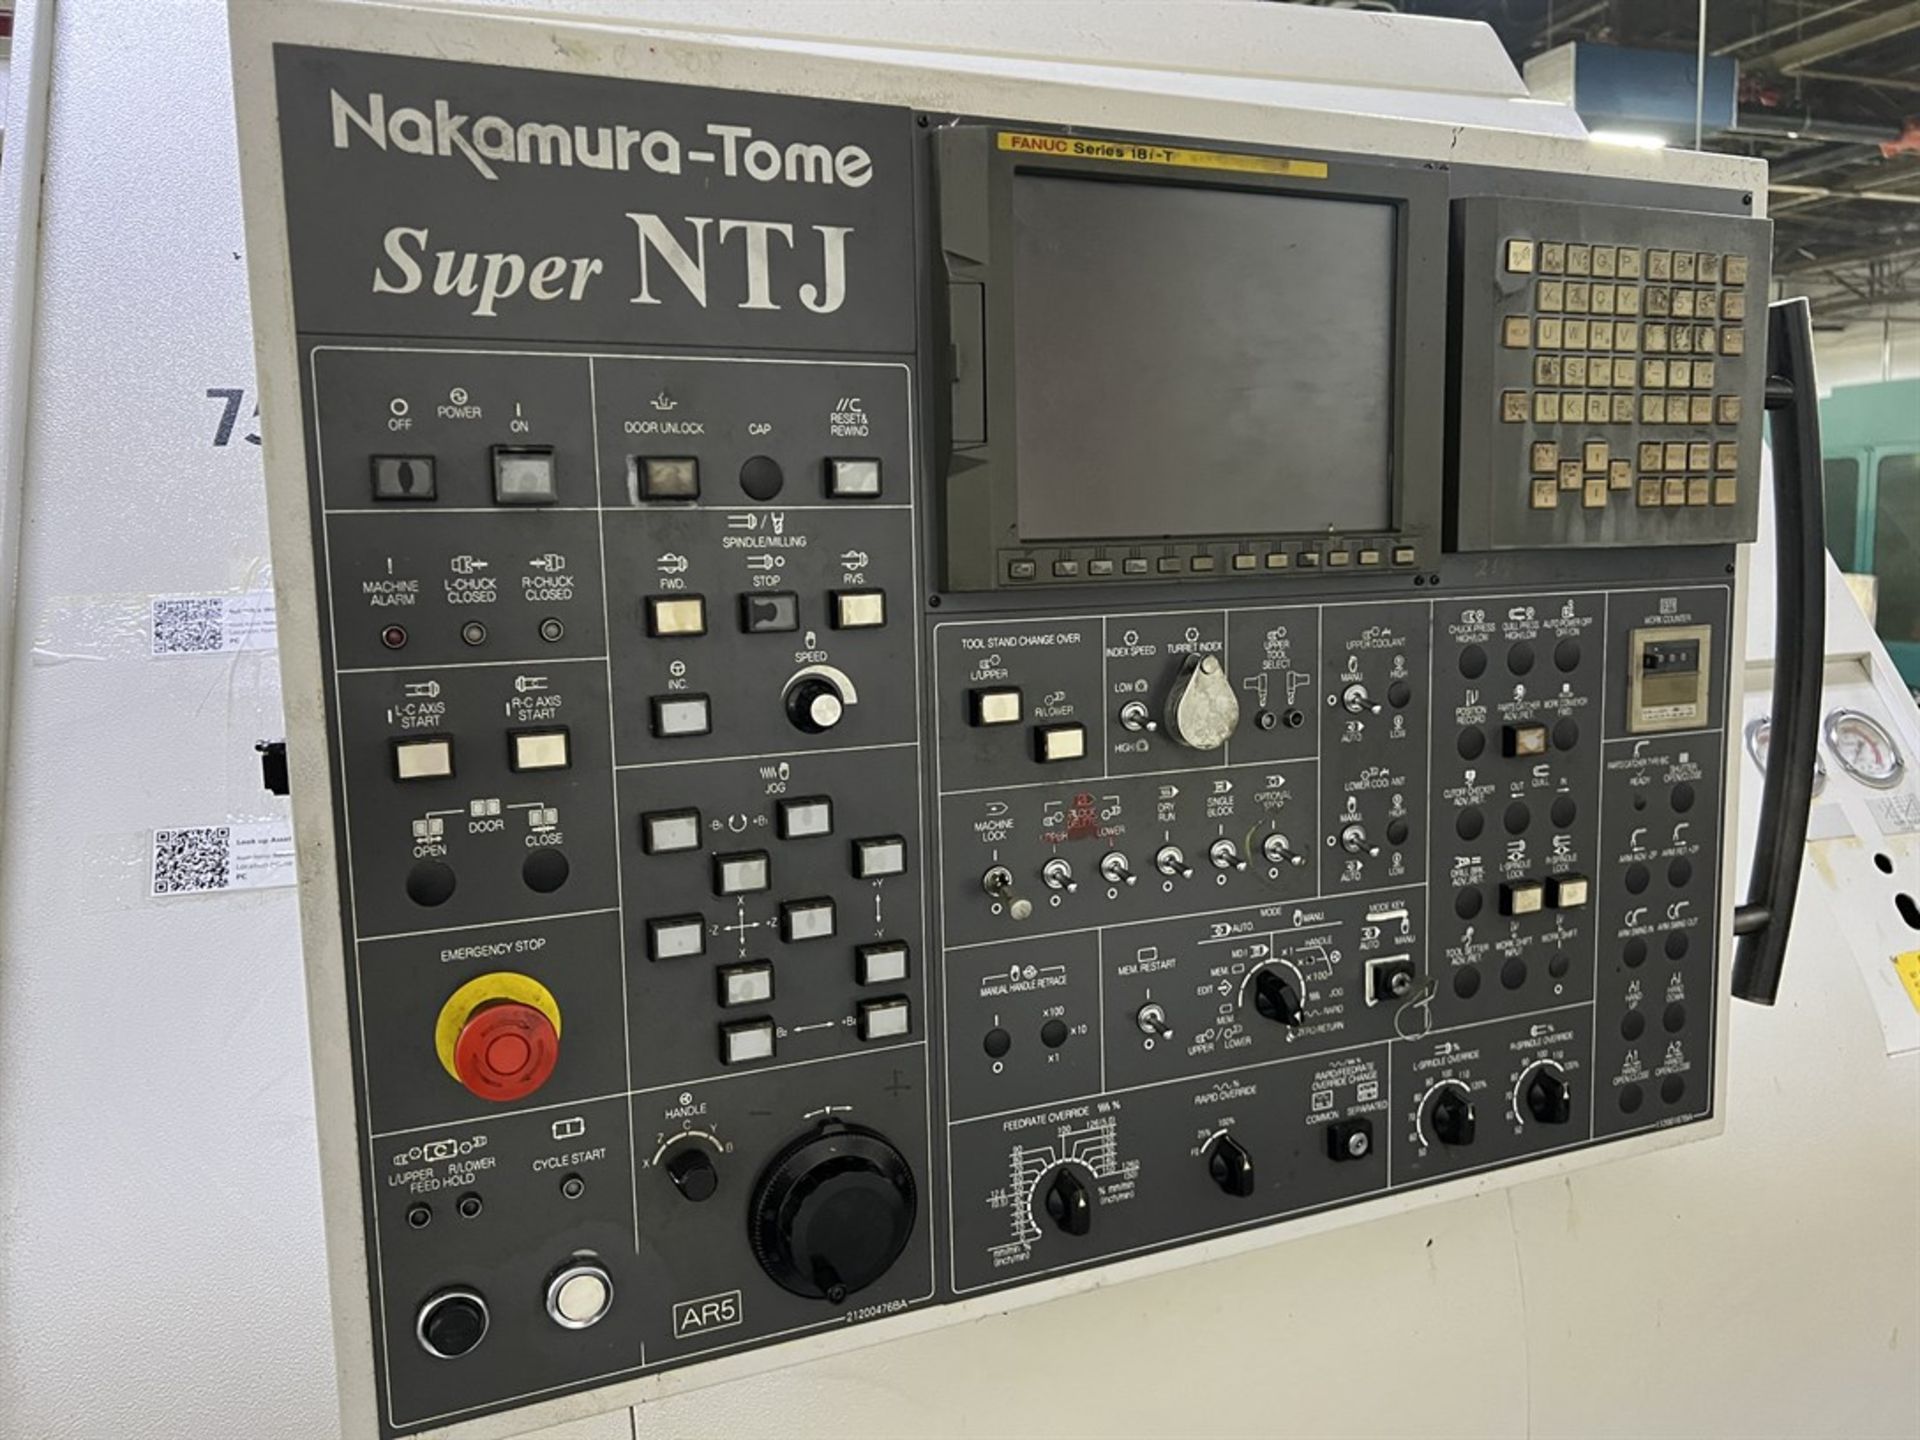 2003 NAKAMURA-TOME Super NTJ CNC Turning/Milling Center, s/n B150202, Fanuc 18i-T Control, 182 - Image 9 of 15